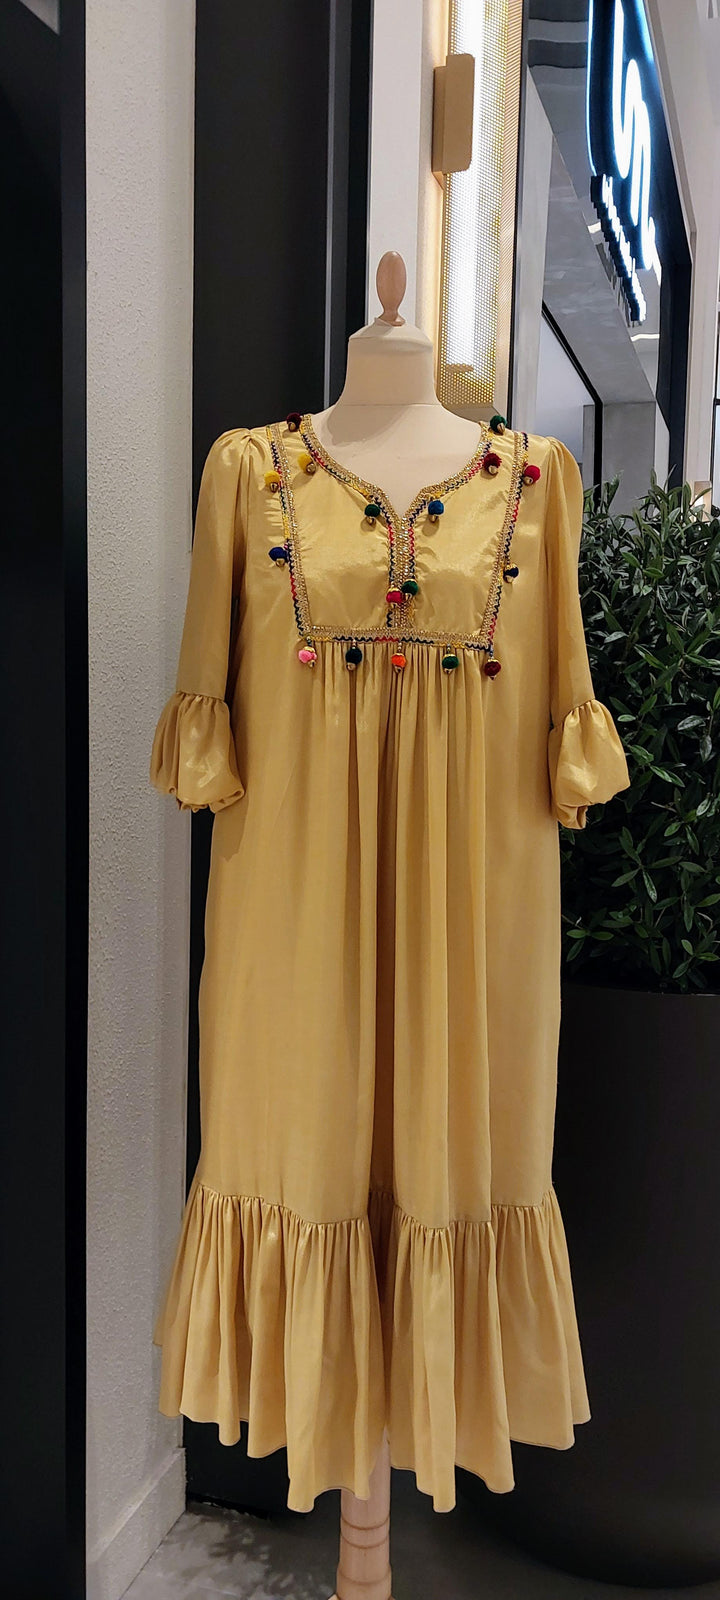 The Lemon Yellow Dress